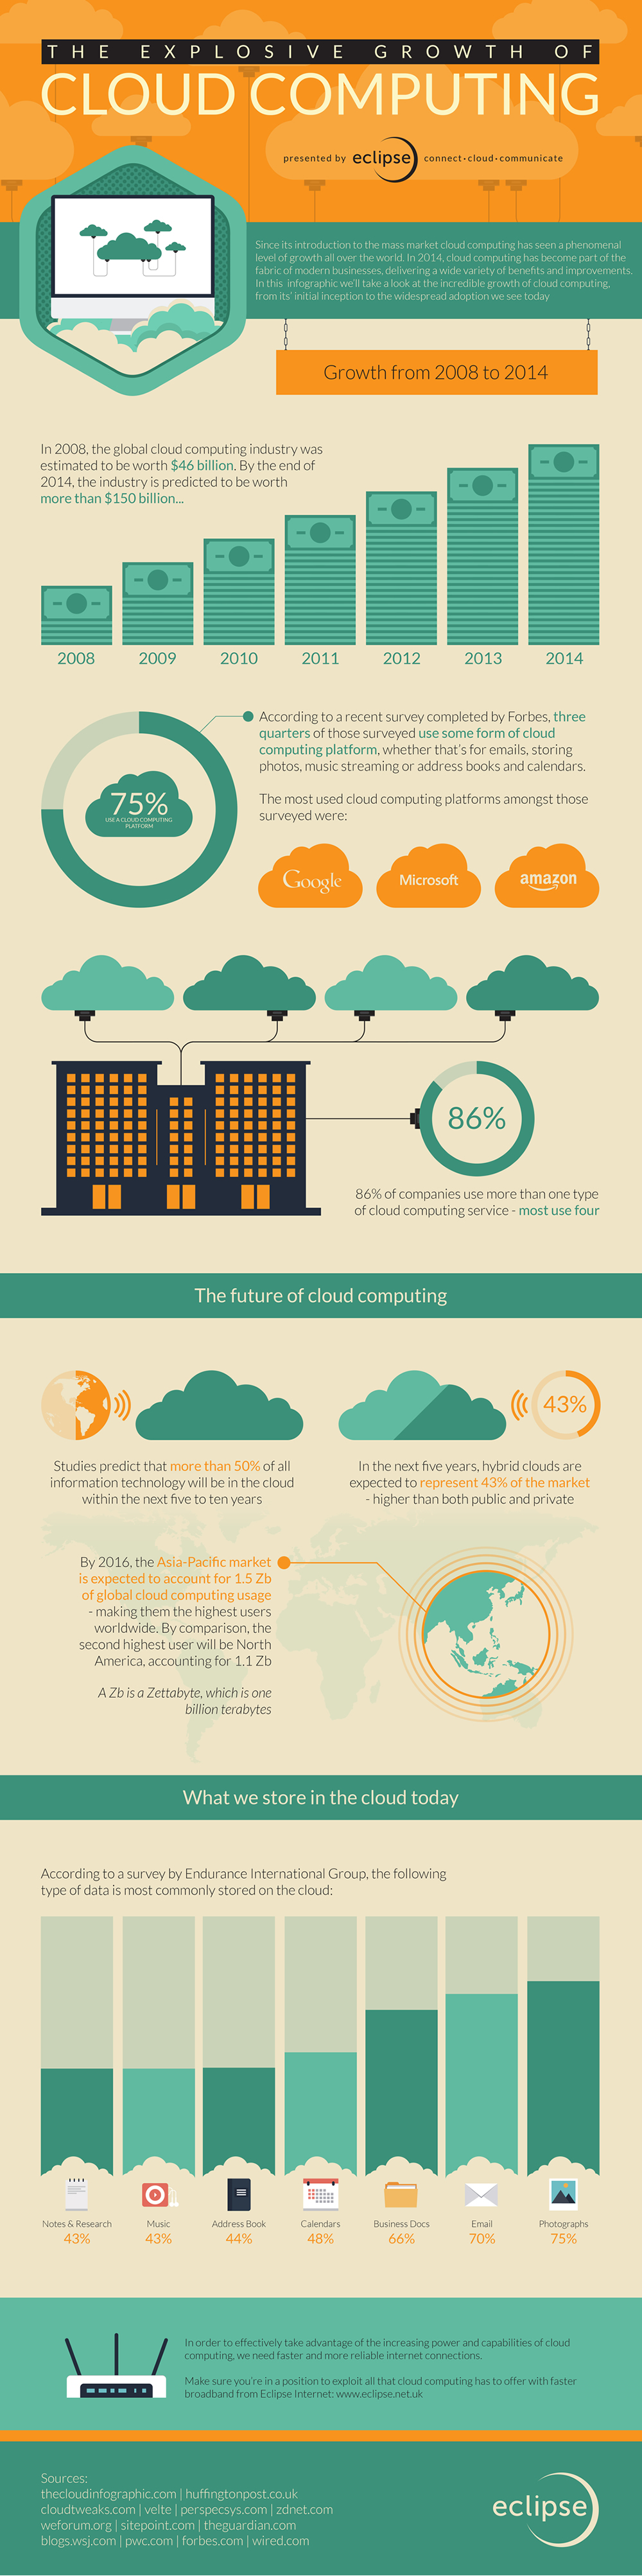 cloud computing infographic 